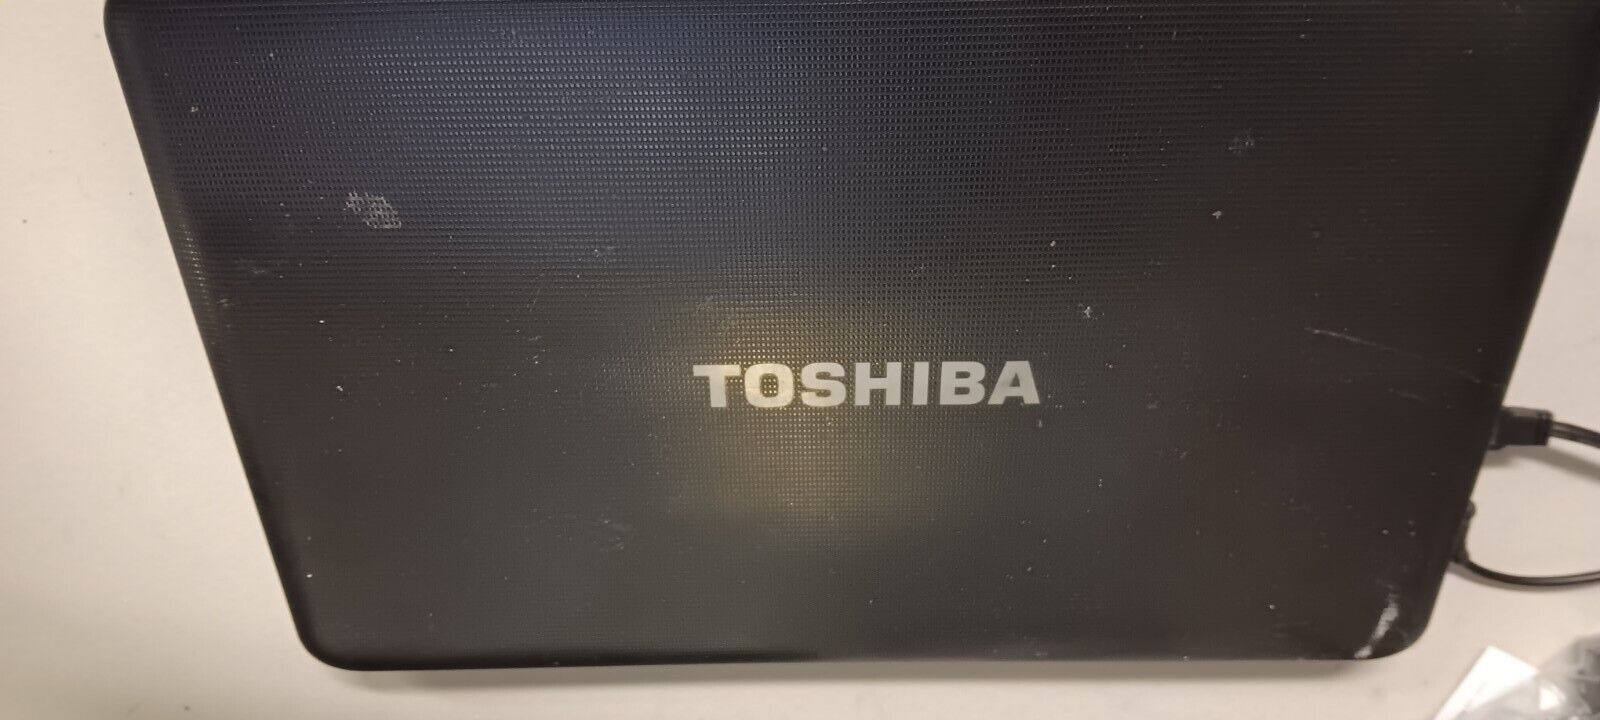 Toshiba Satellite C855D-S5320 Laptop AMD E2-1800 APU 4GB RAM 250GB Works Great